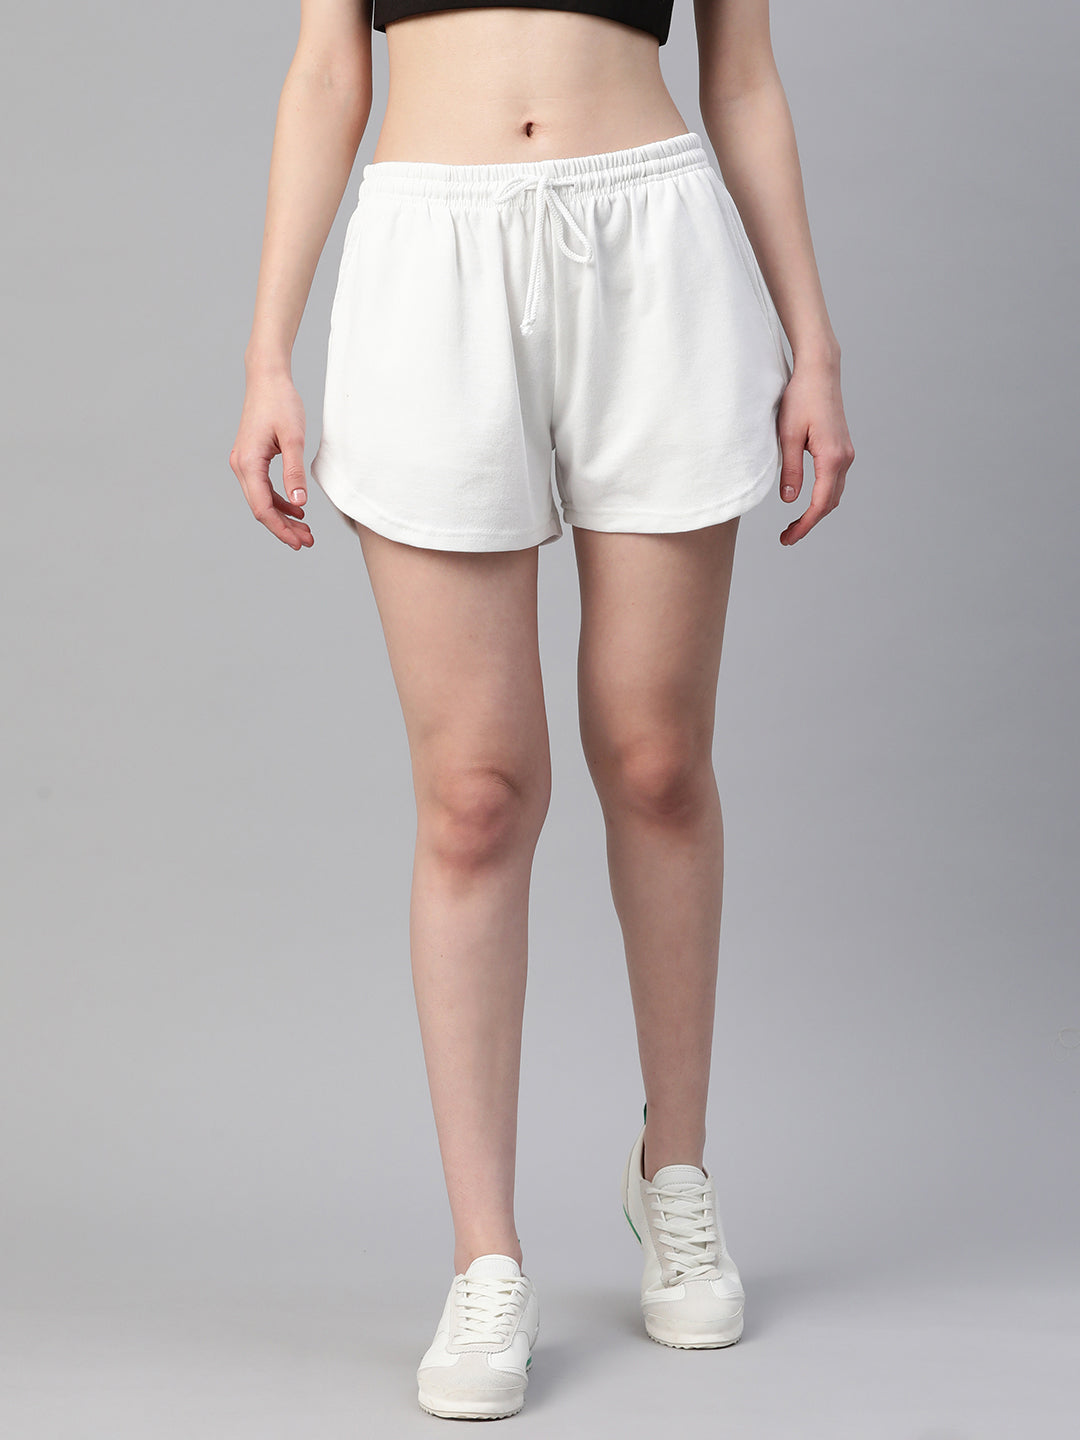 laabha women summer stylish shorts